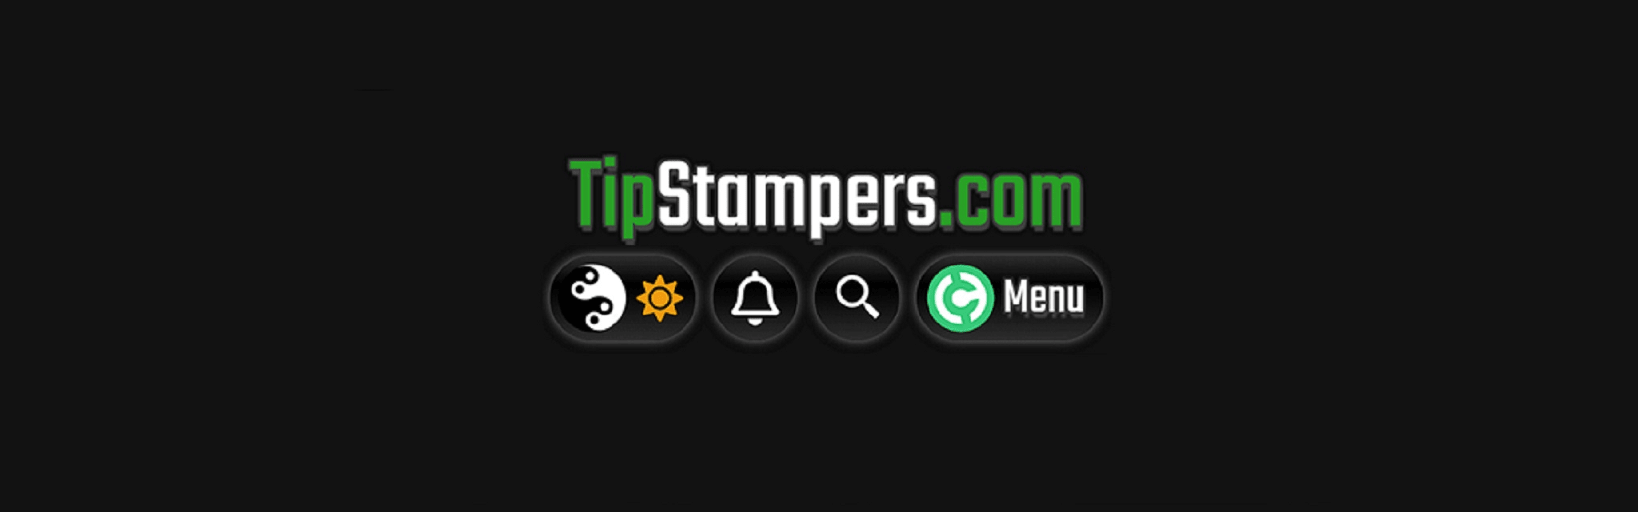 TipStampers.com